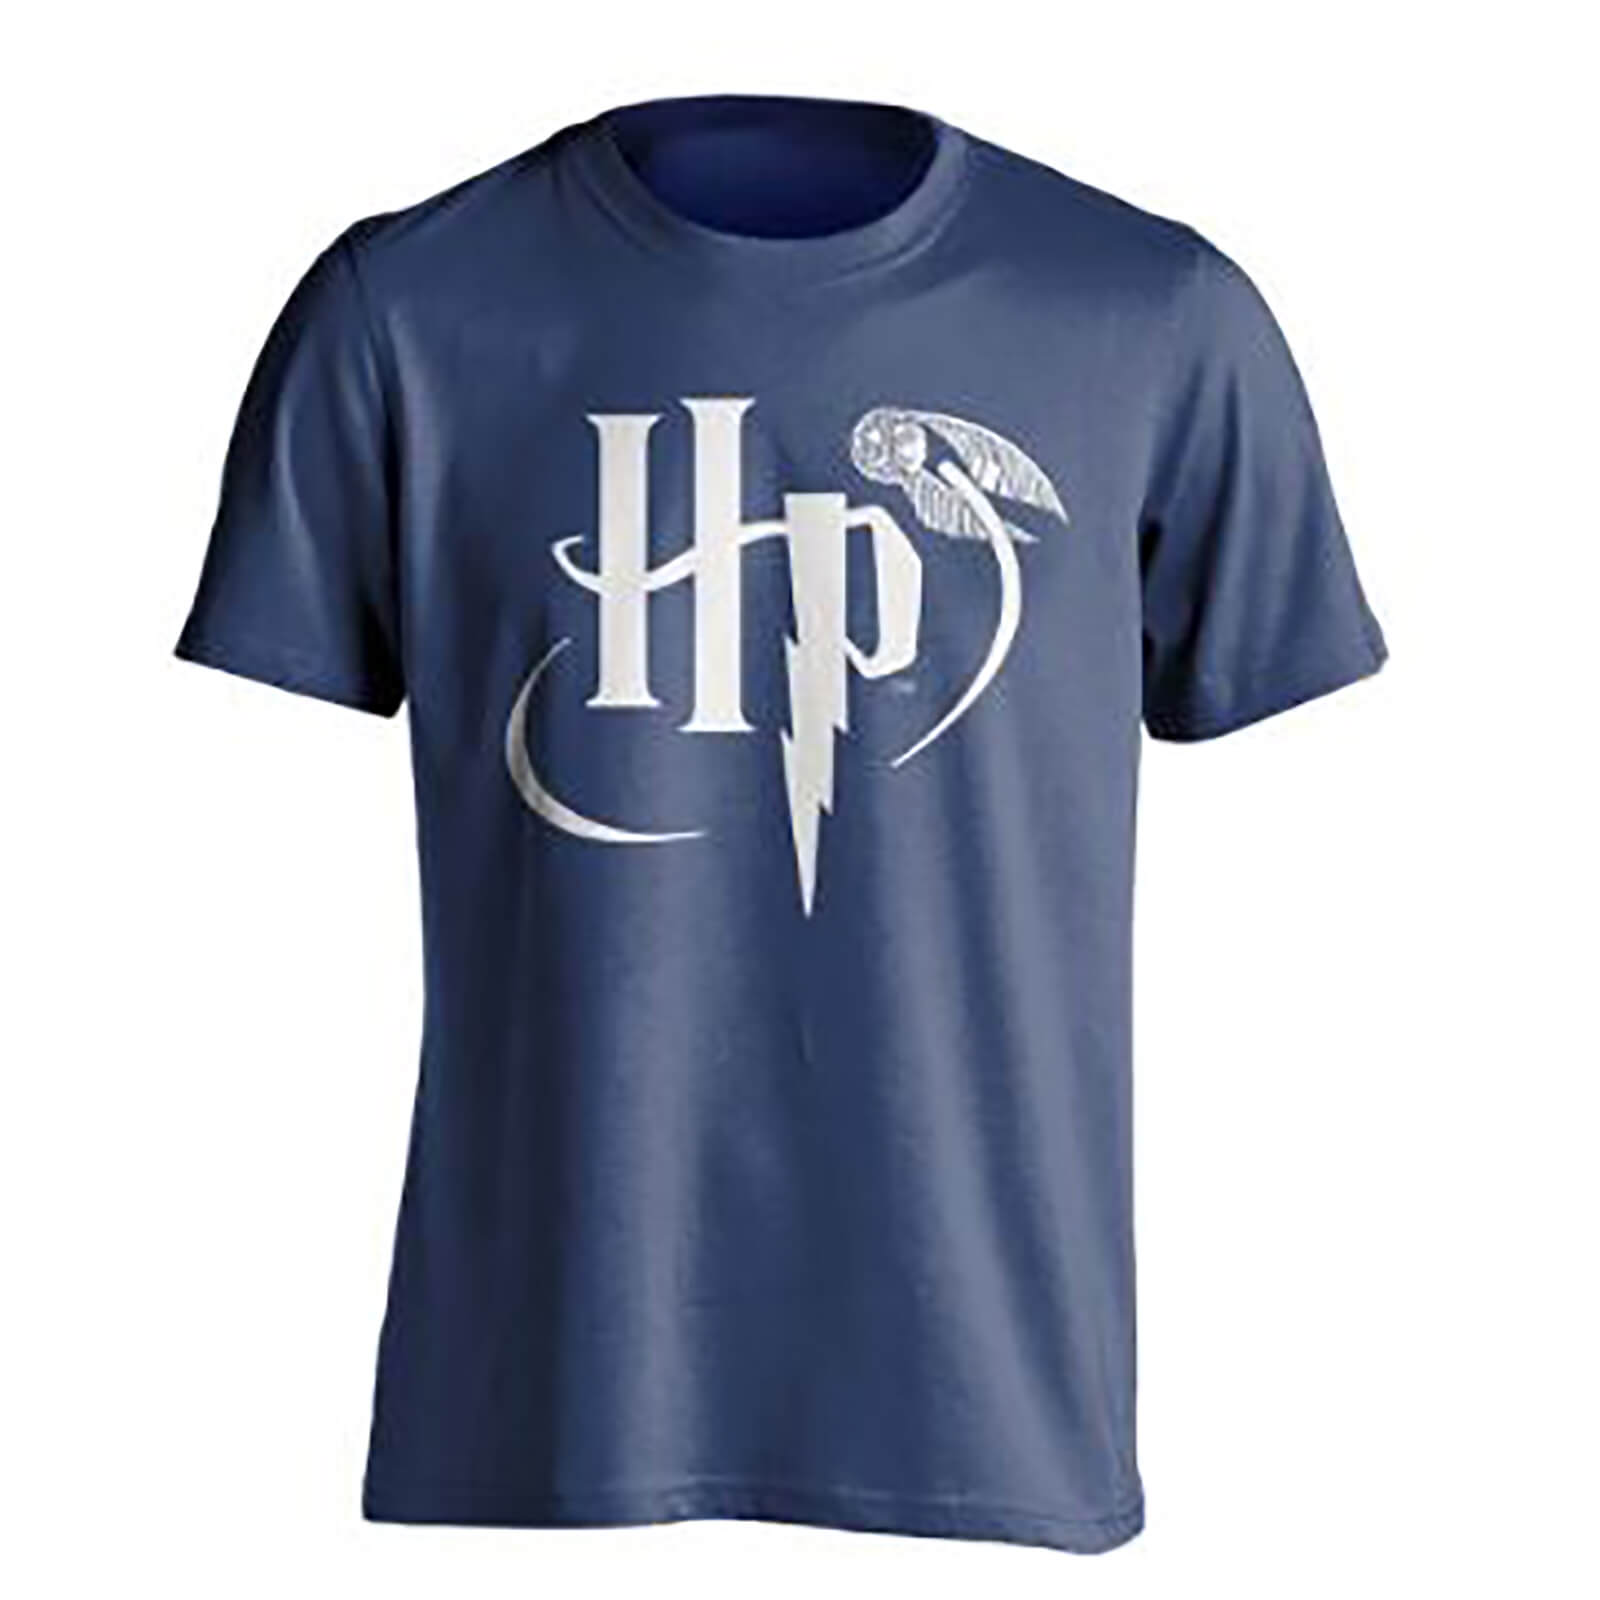 Harry potter t shirt logo